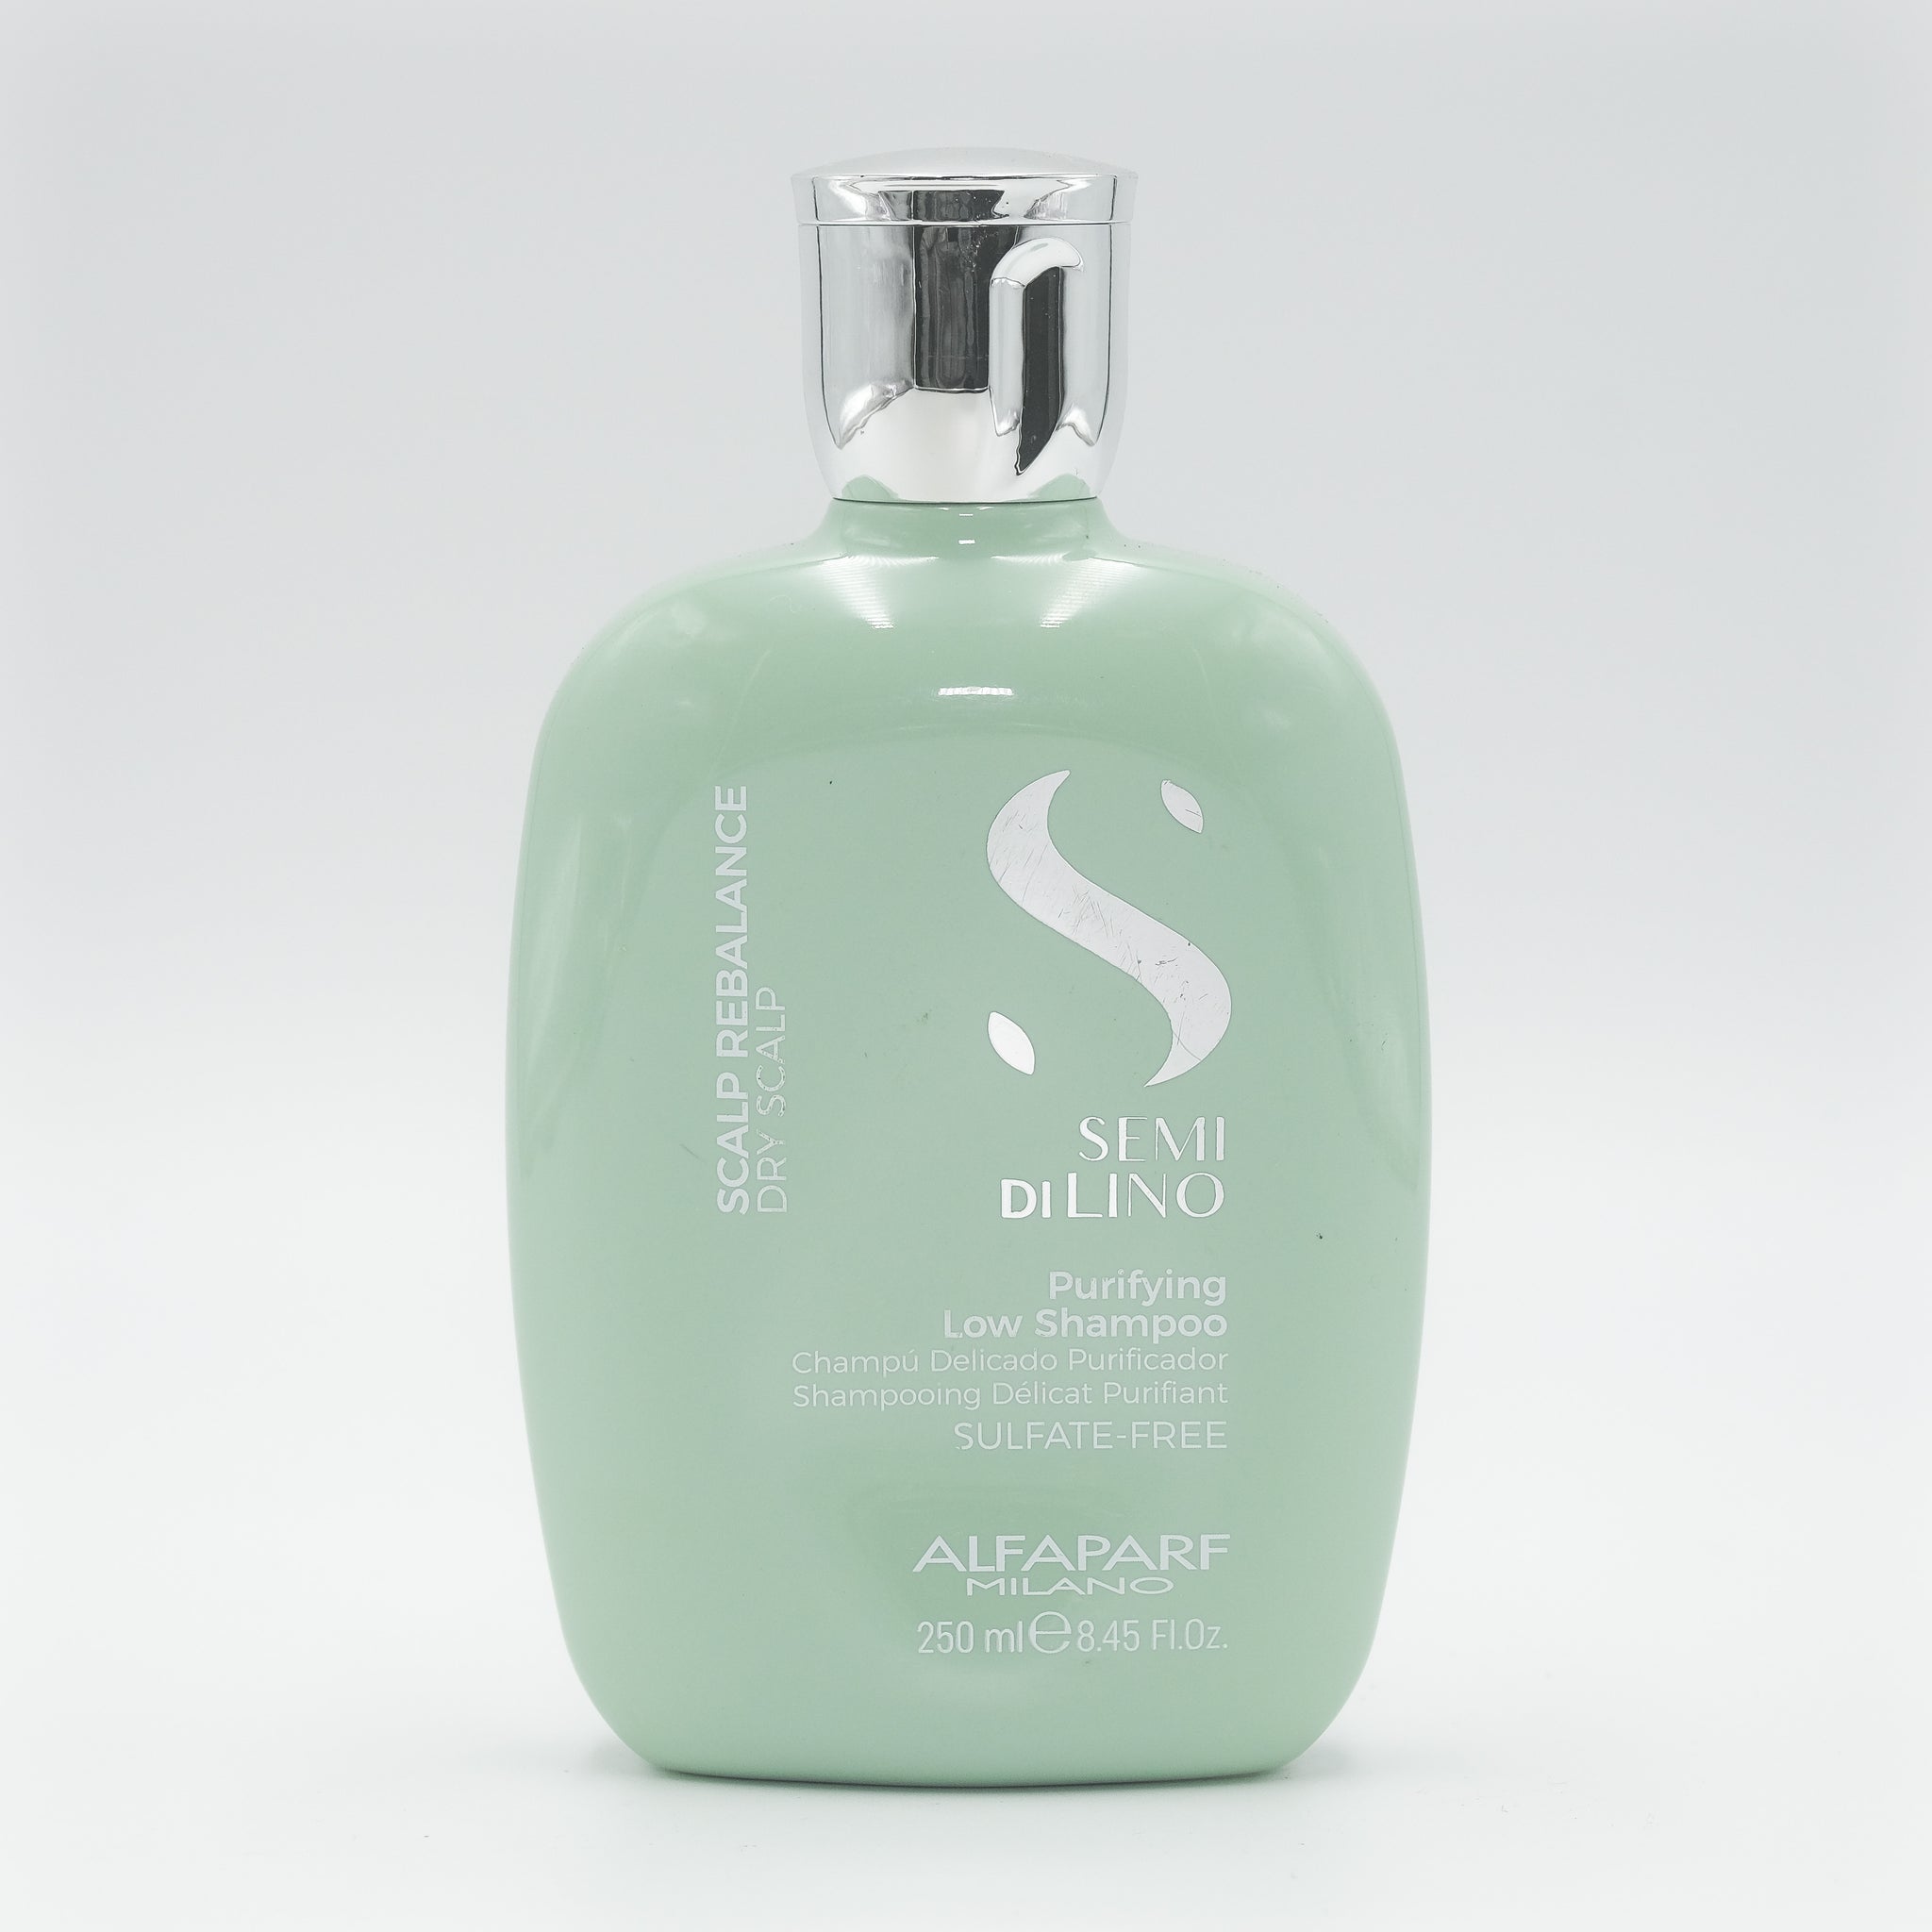 ALFAPARF Milani Semi Di lIno Scalp Rebalance Purifying Low Shampoo8.45 oz